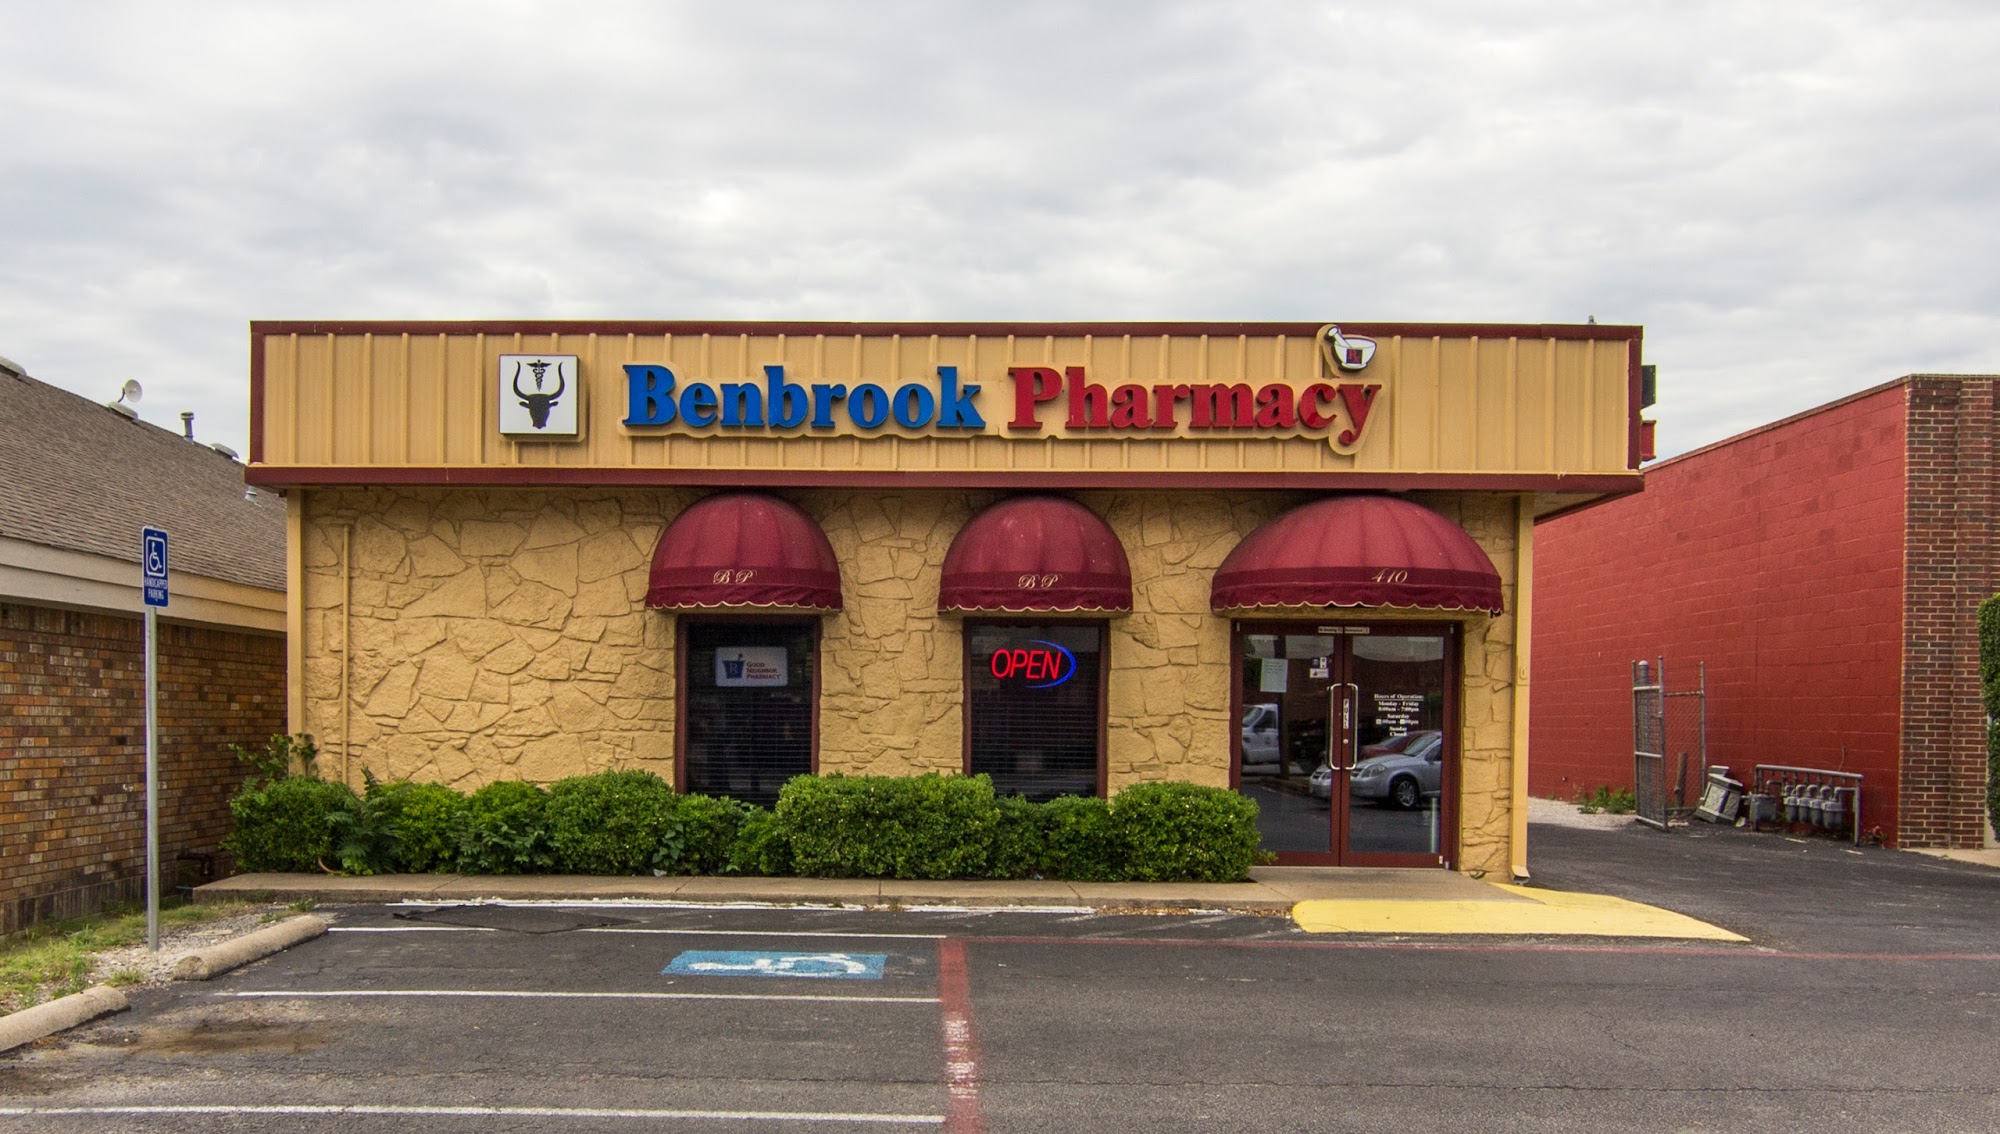 Benbrook Pharmacy